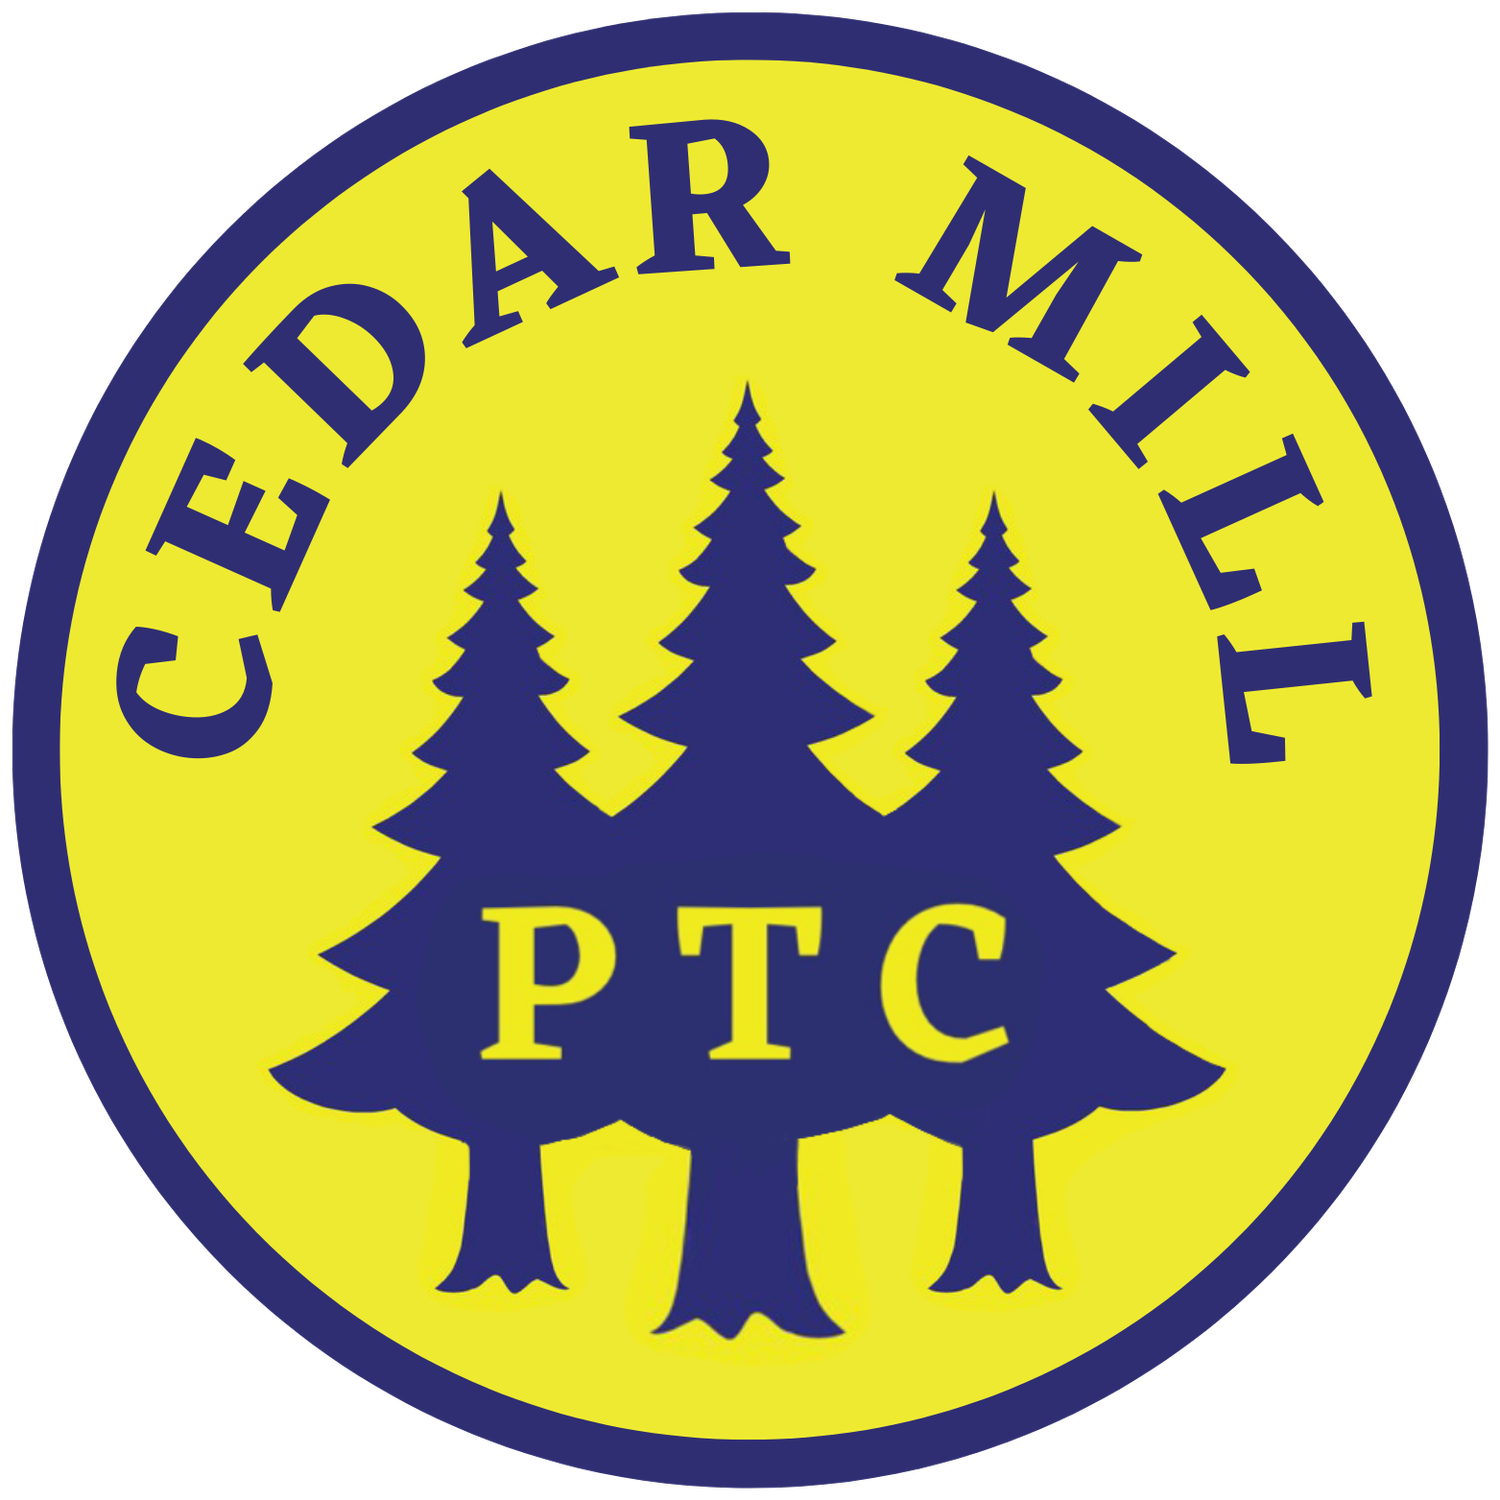 Cedar Mill PTC